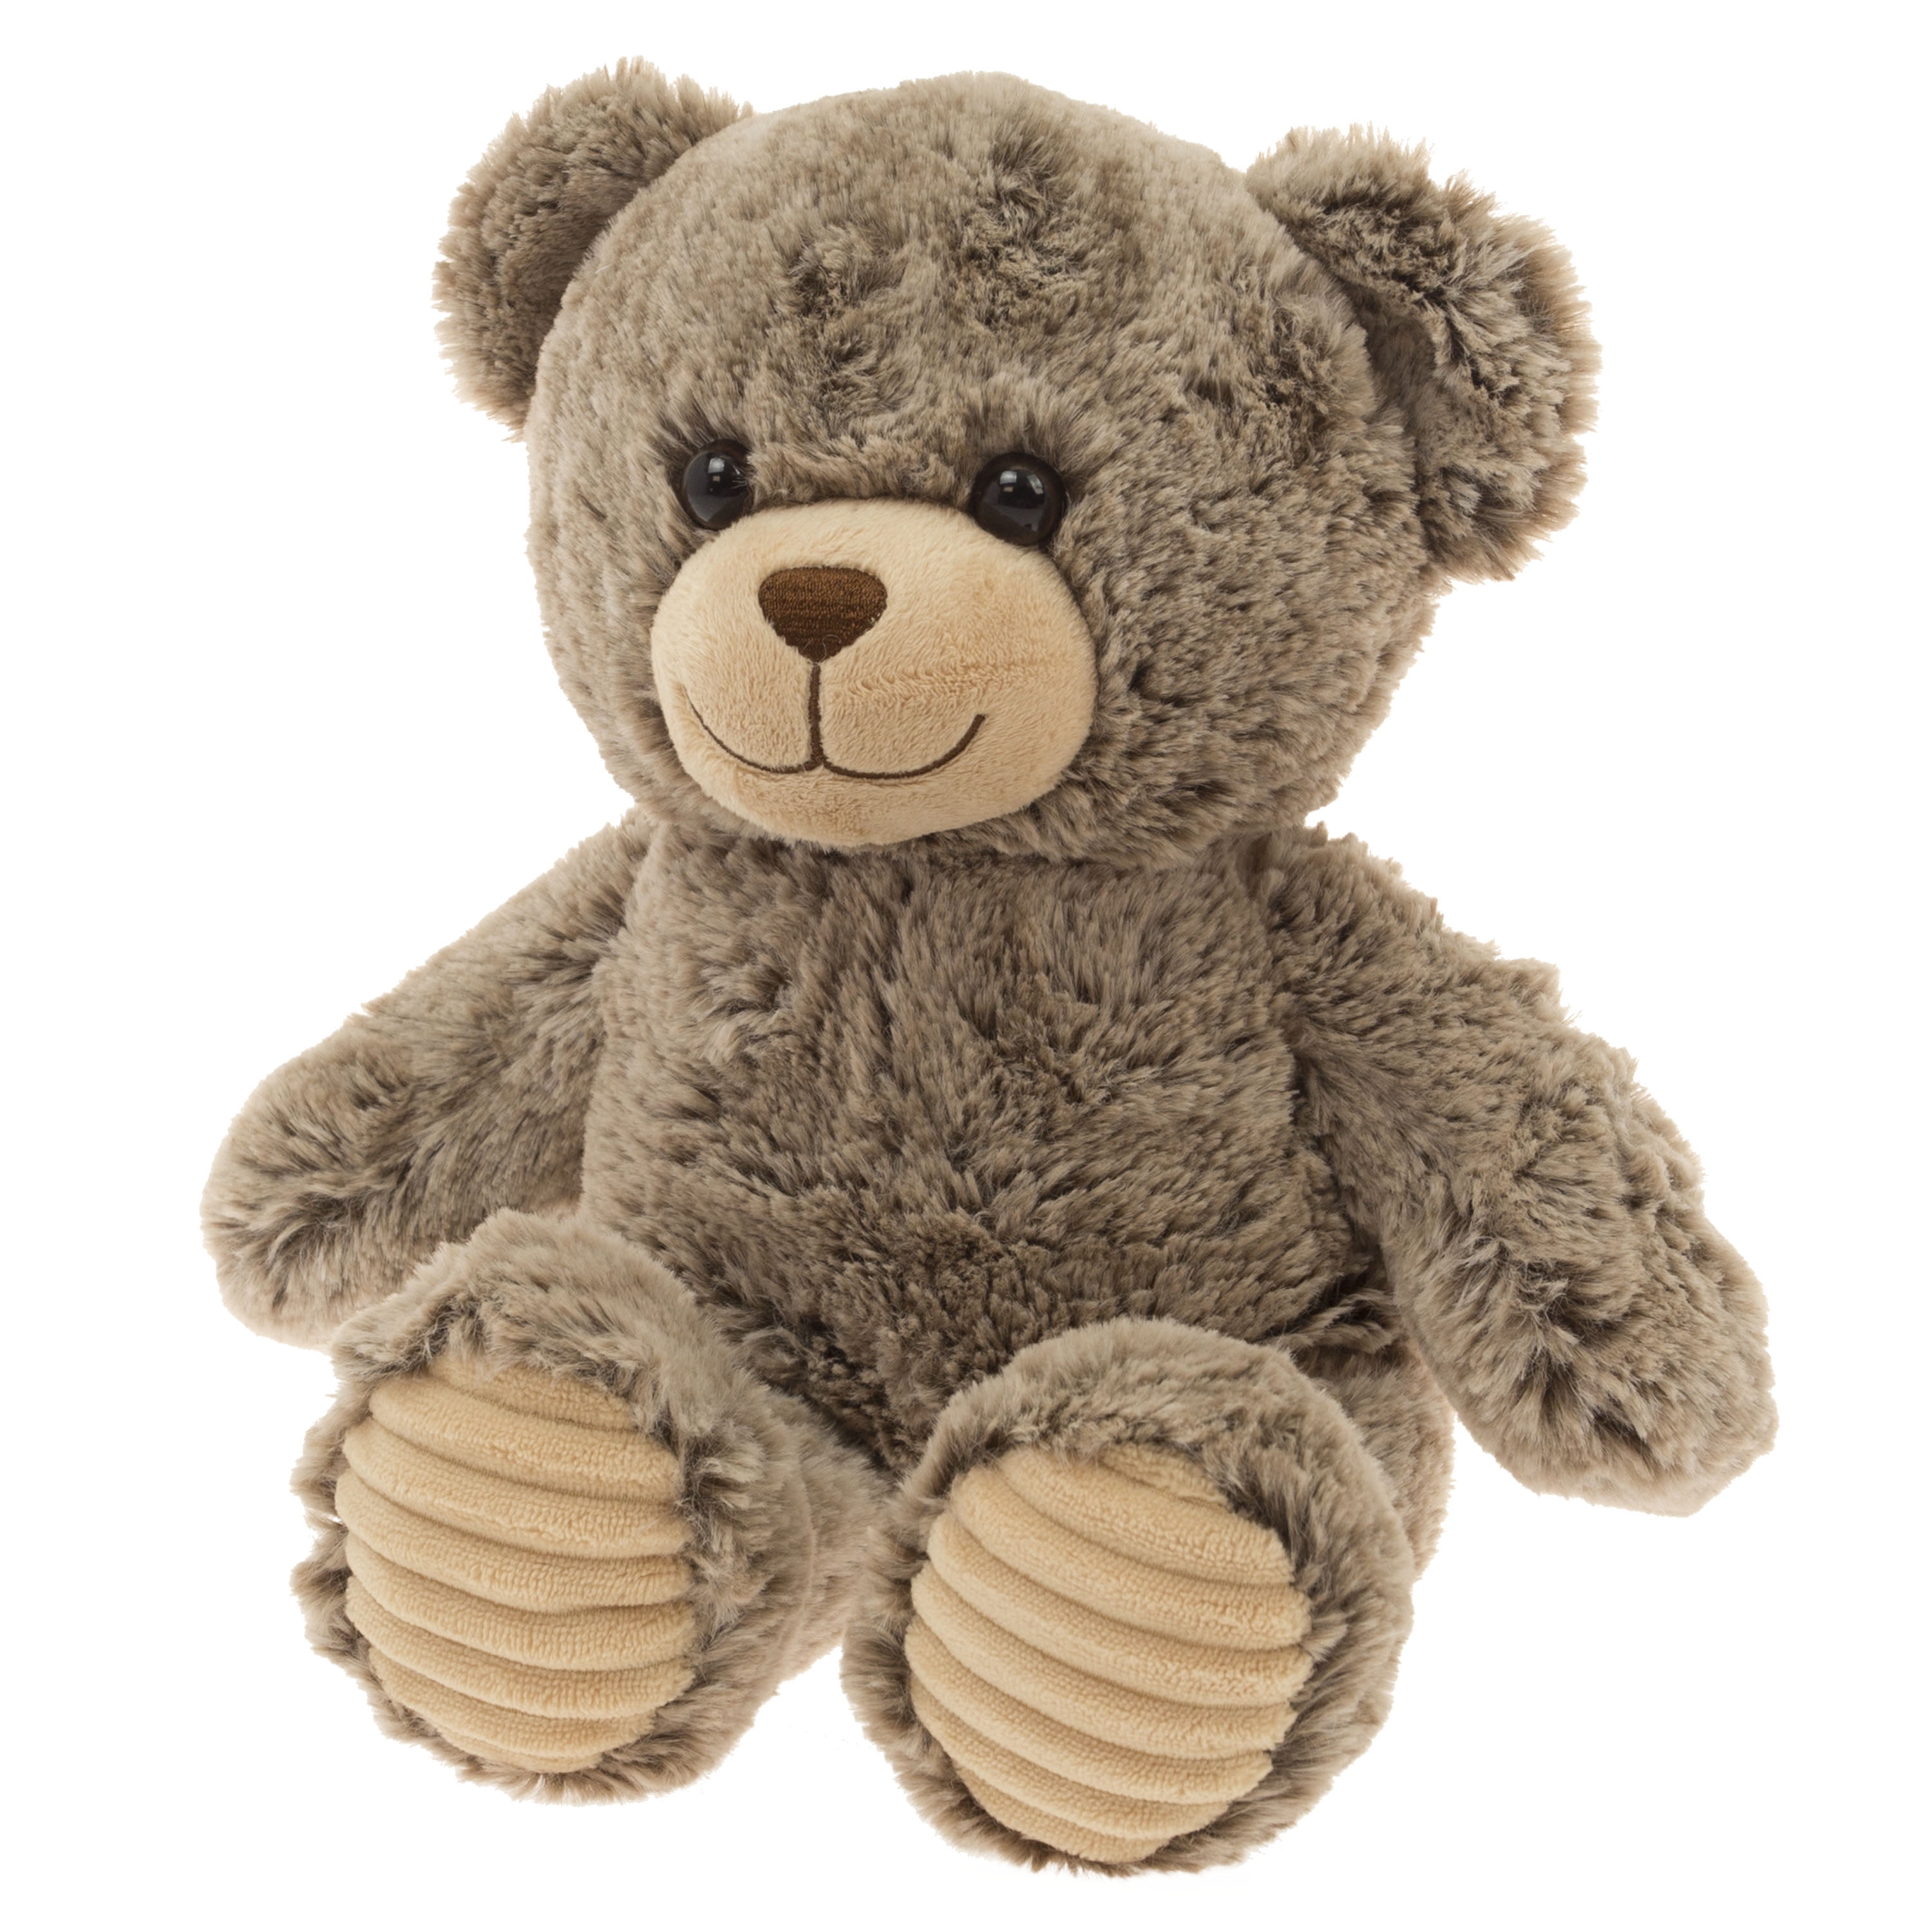 Spark Create Imagine Plush Teddy Bear Brown Tan 14in Stuffed Animal Toy for sale online 